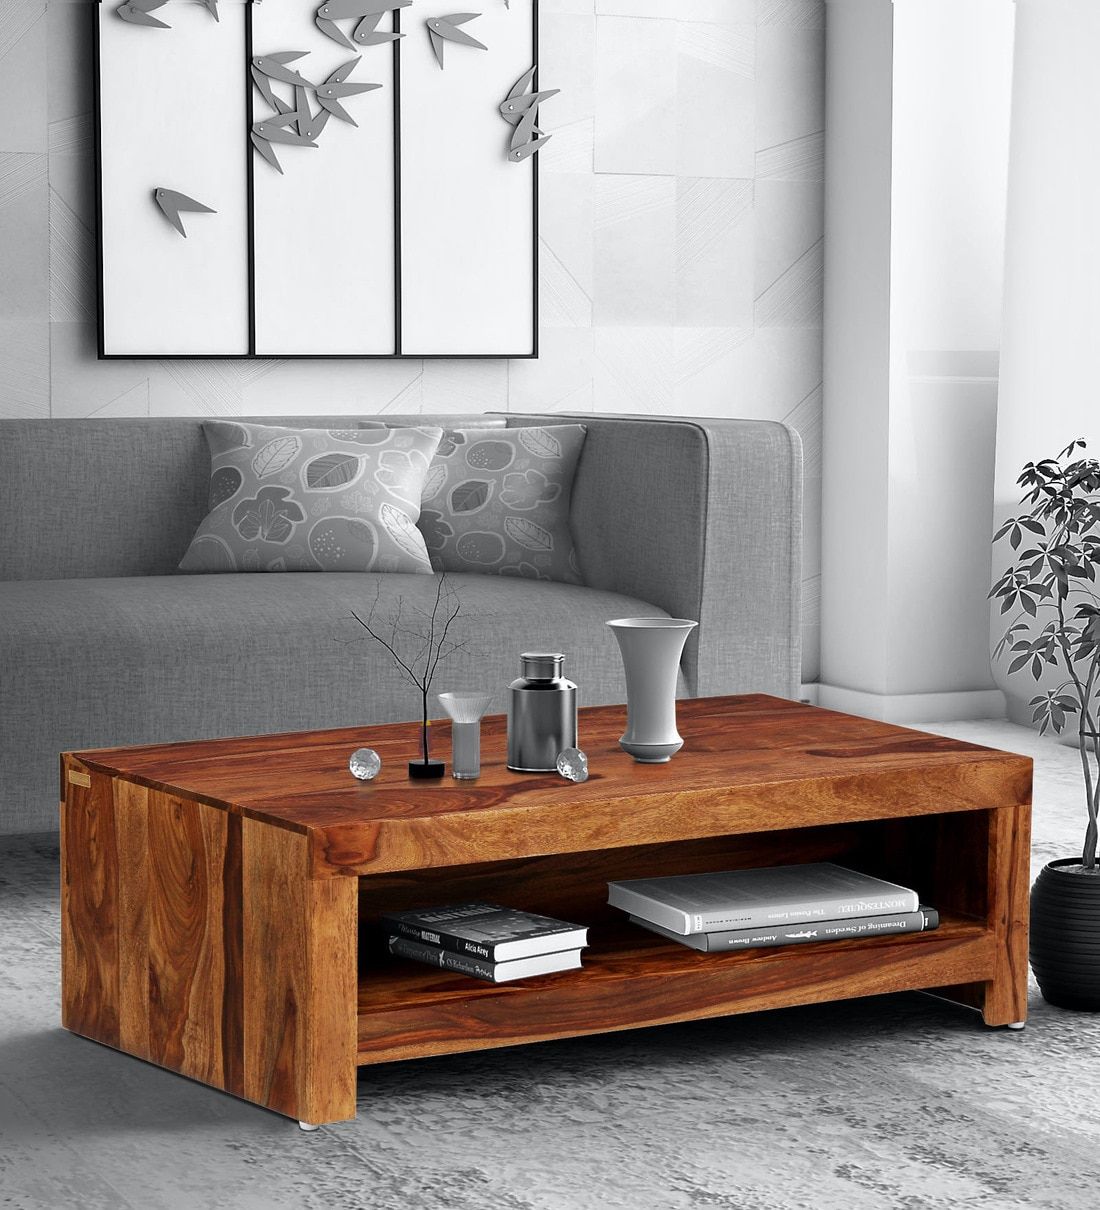 Buy Acropolis Solid Wood Coffee Table In Rustic Teak Finish With Rustic Wood Coffee Tables (Gallery 6 of 21)